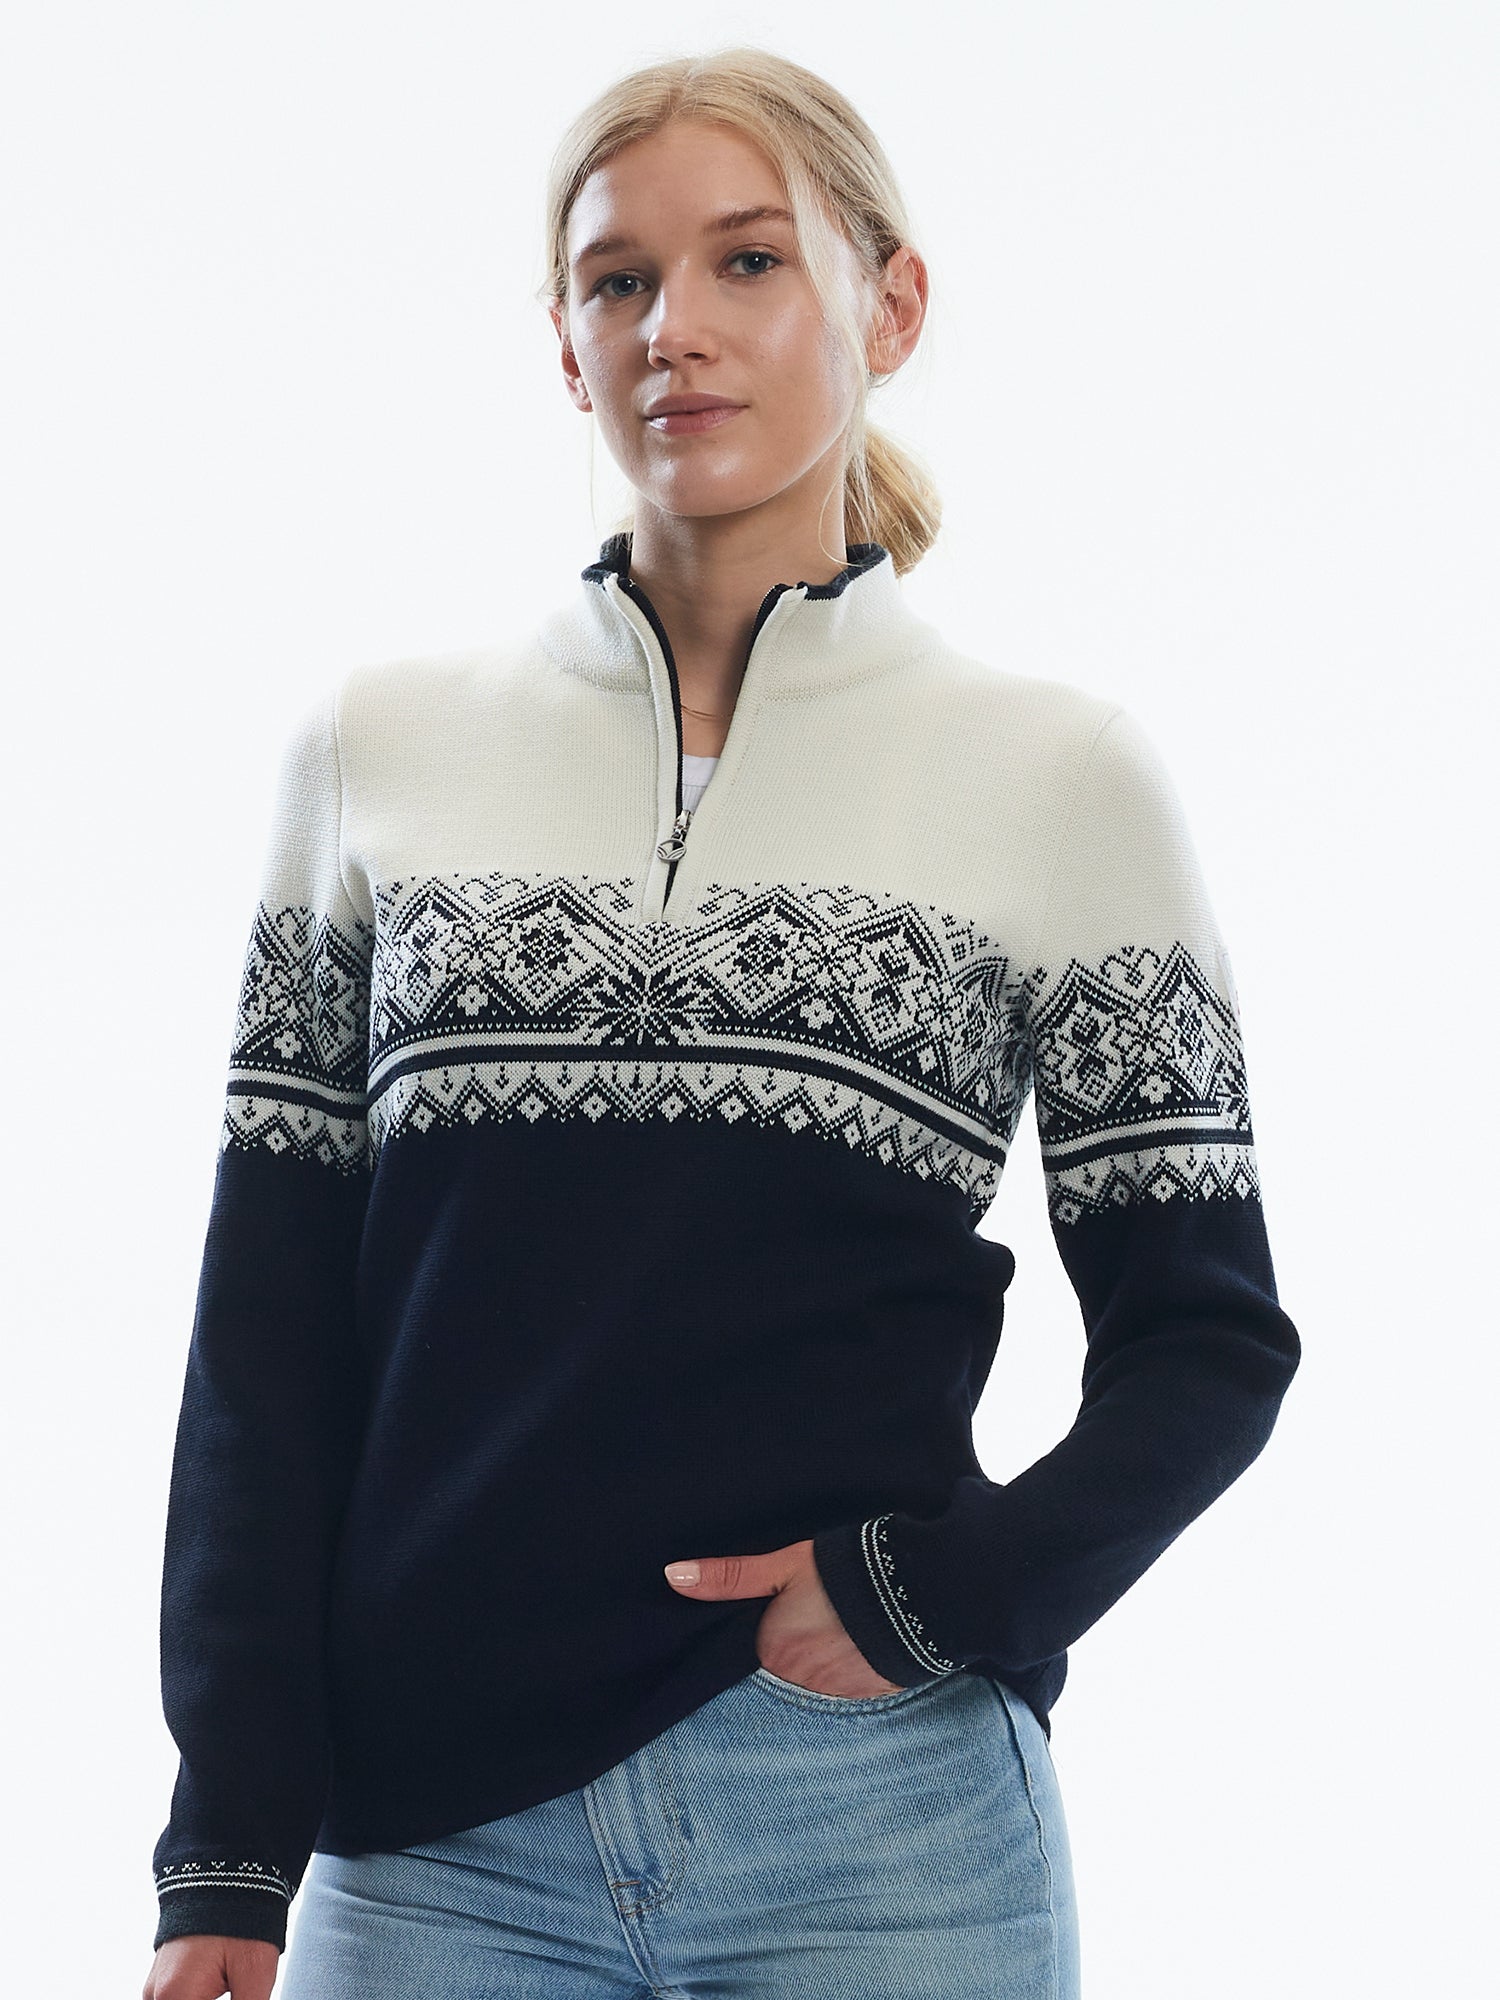 Dale of Norway - Moritz Women's Sweater - Black